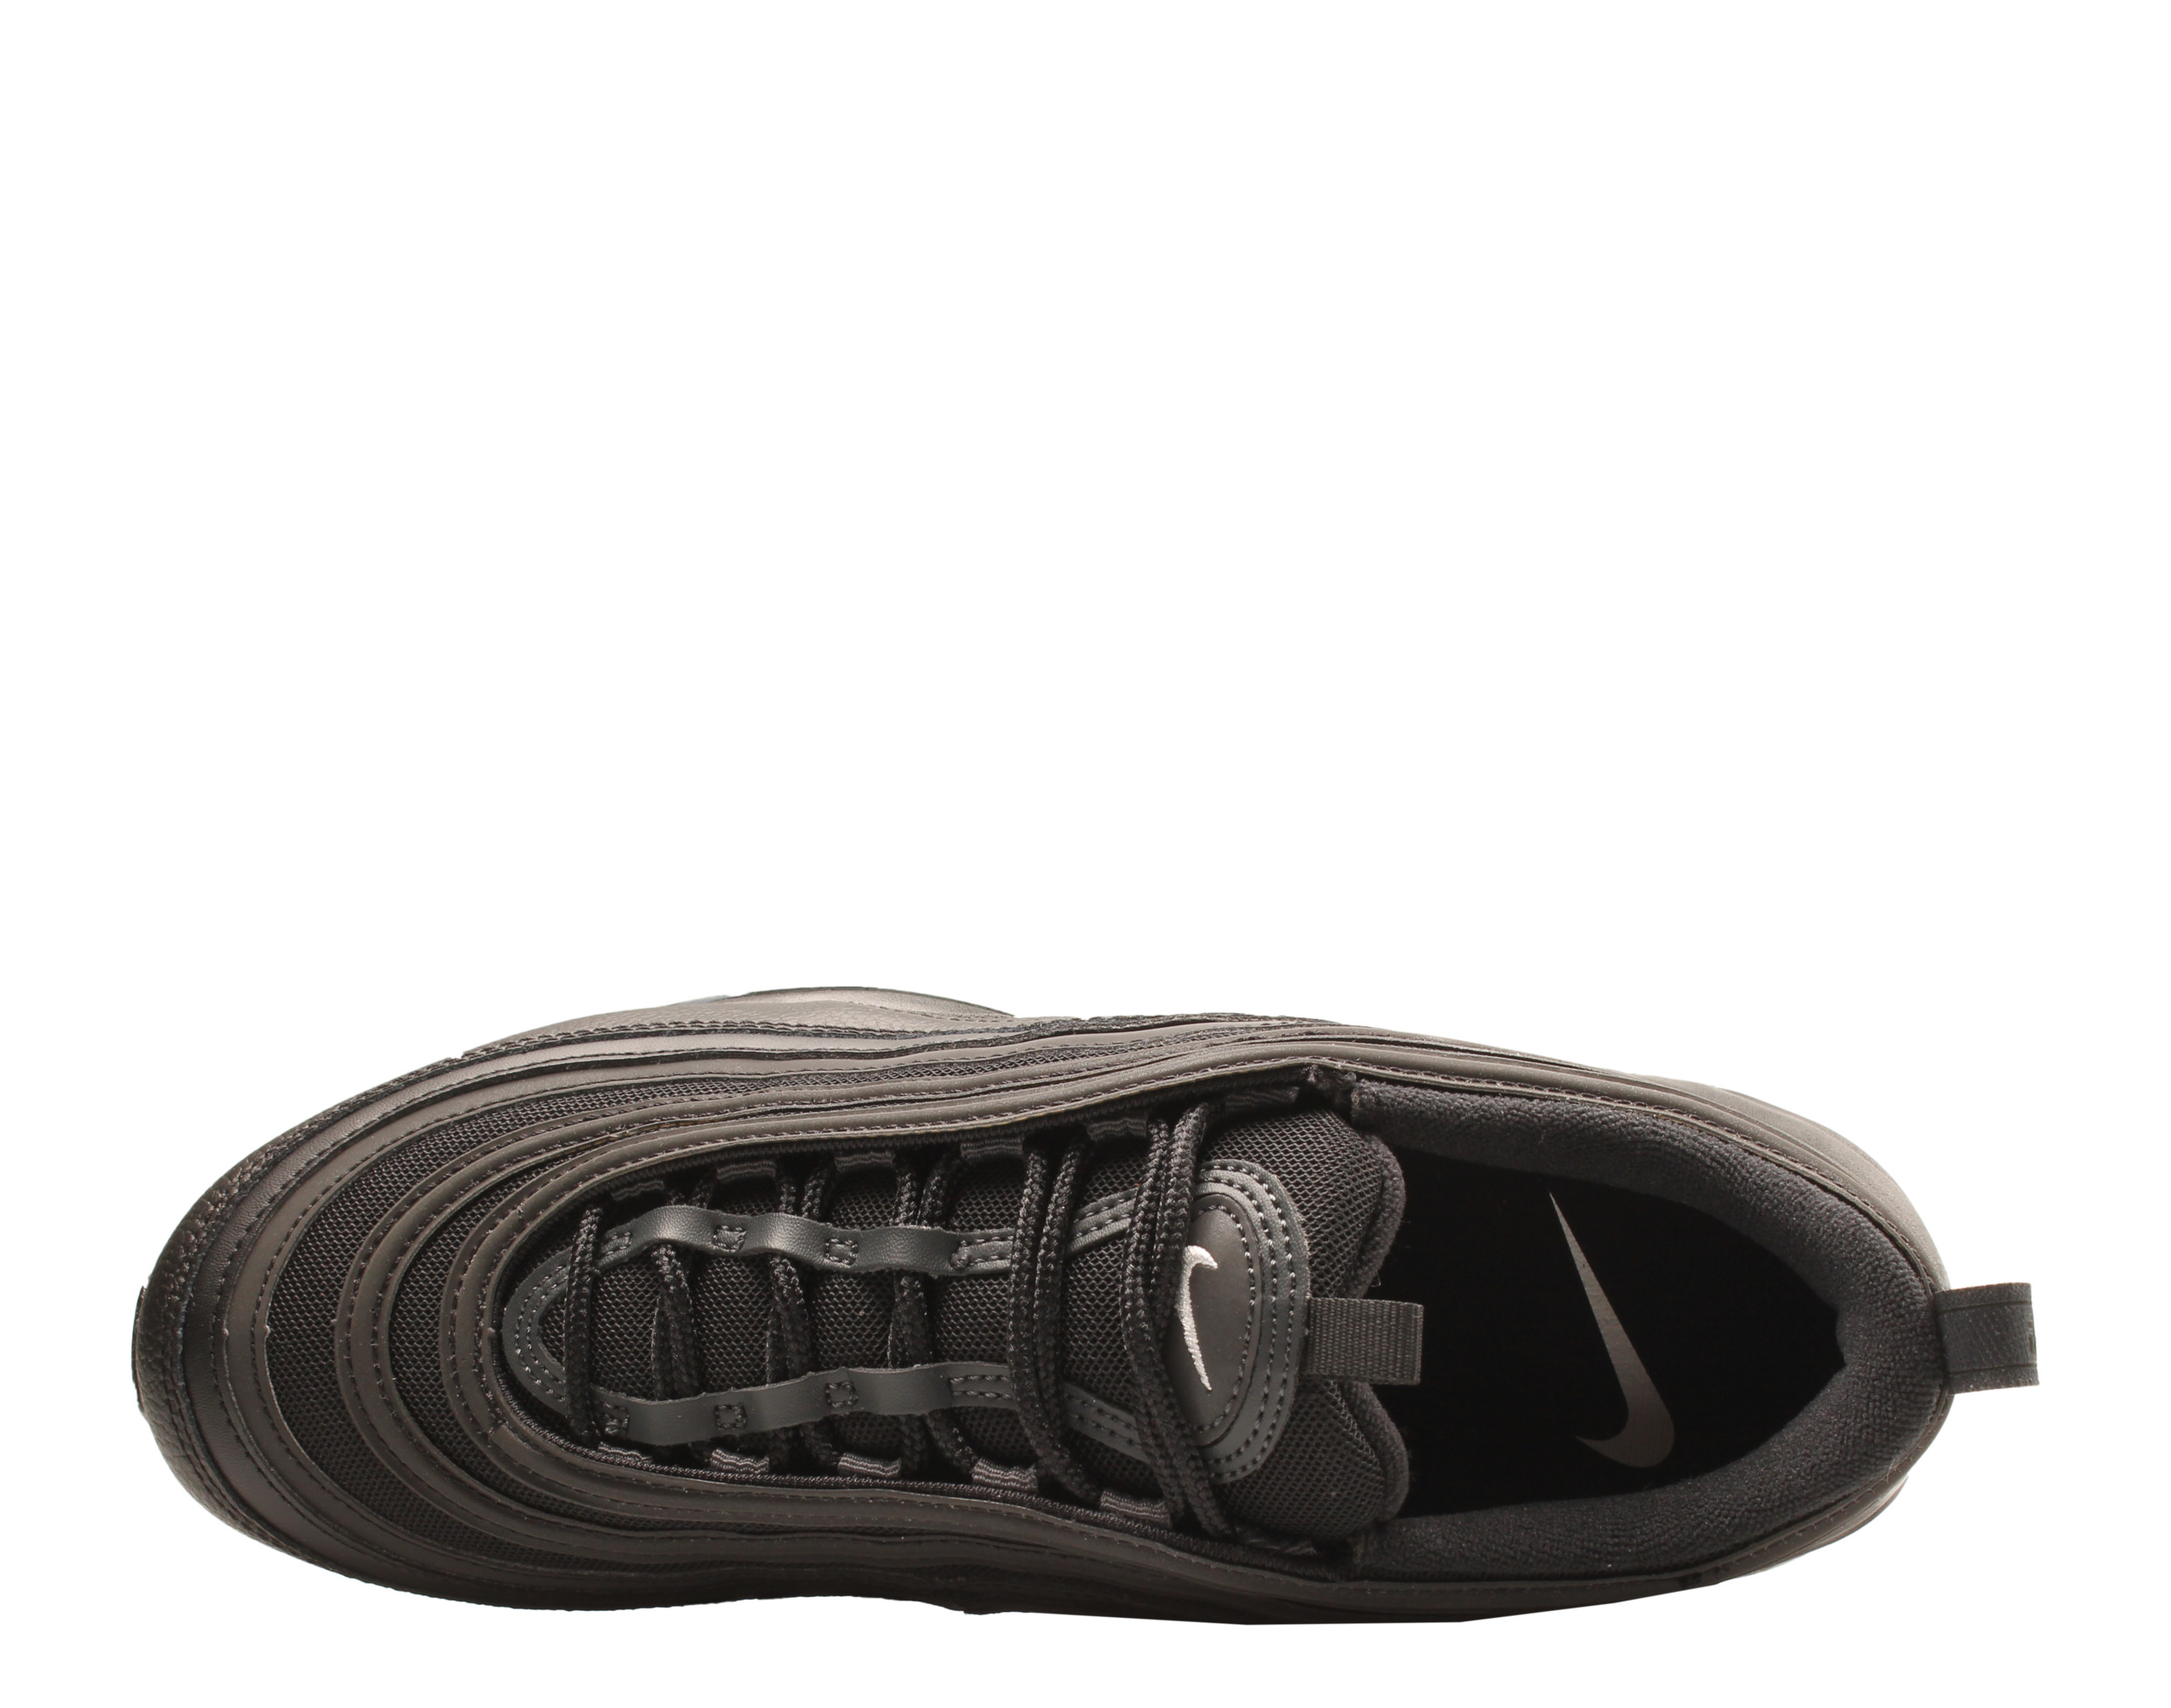 Men's Nike Air Max 97 Black/White-Anthracite (921826 015) - 9 - image 4 of 6